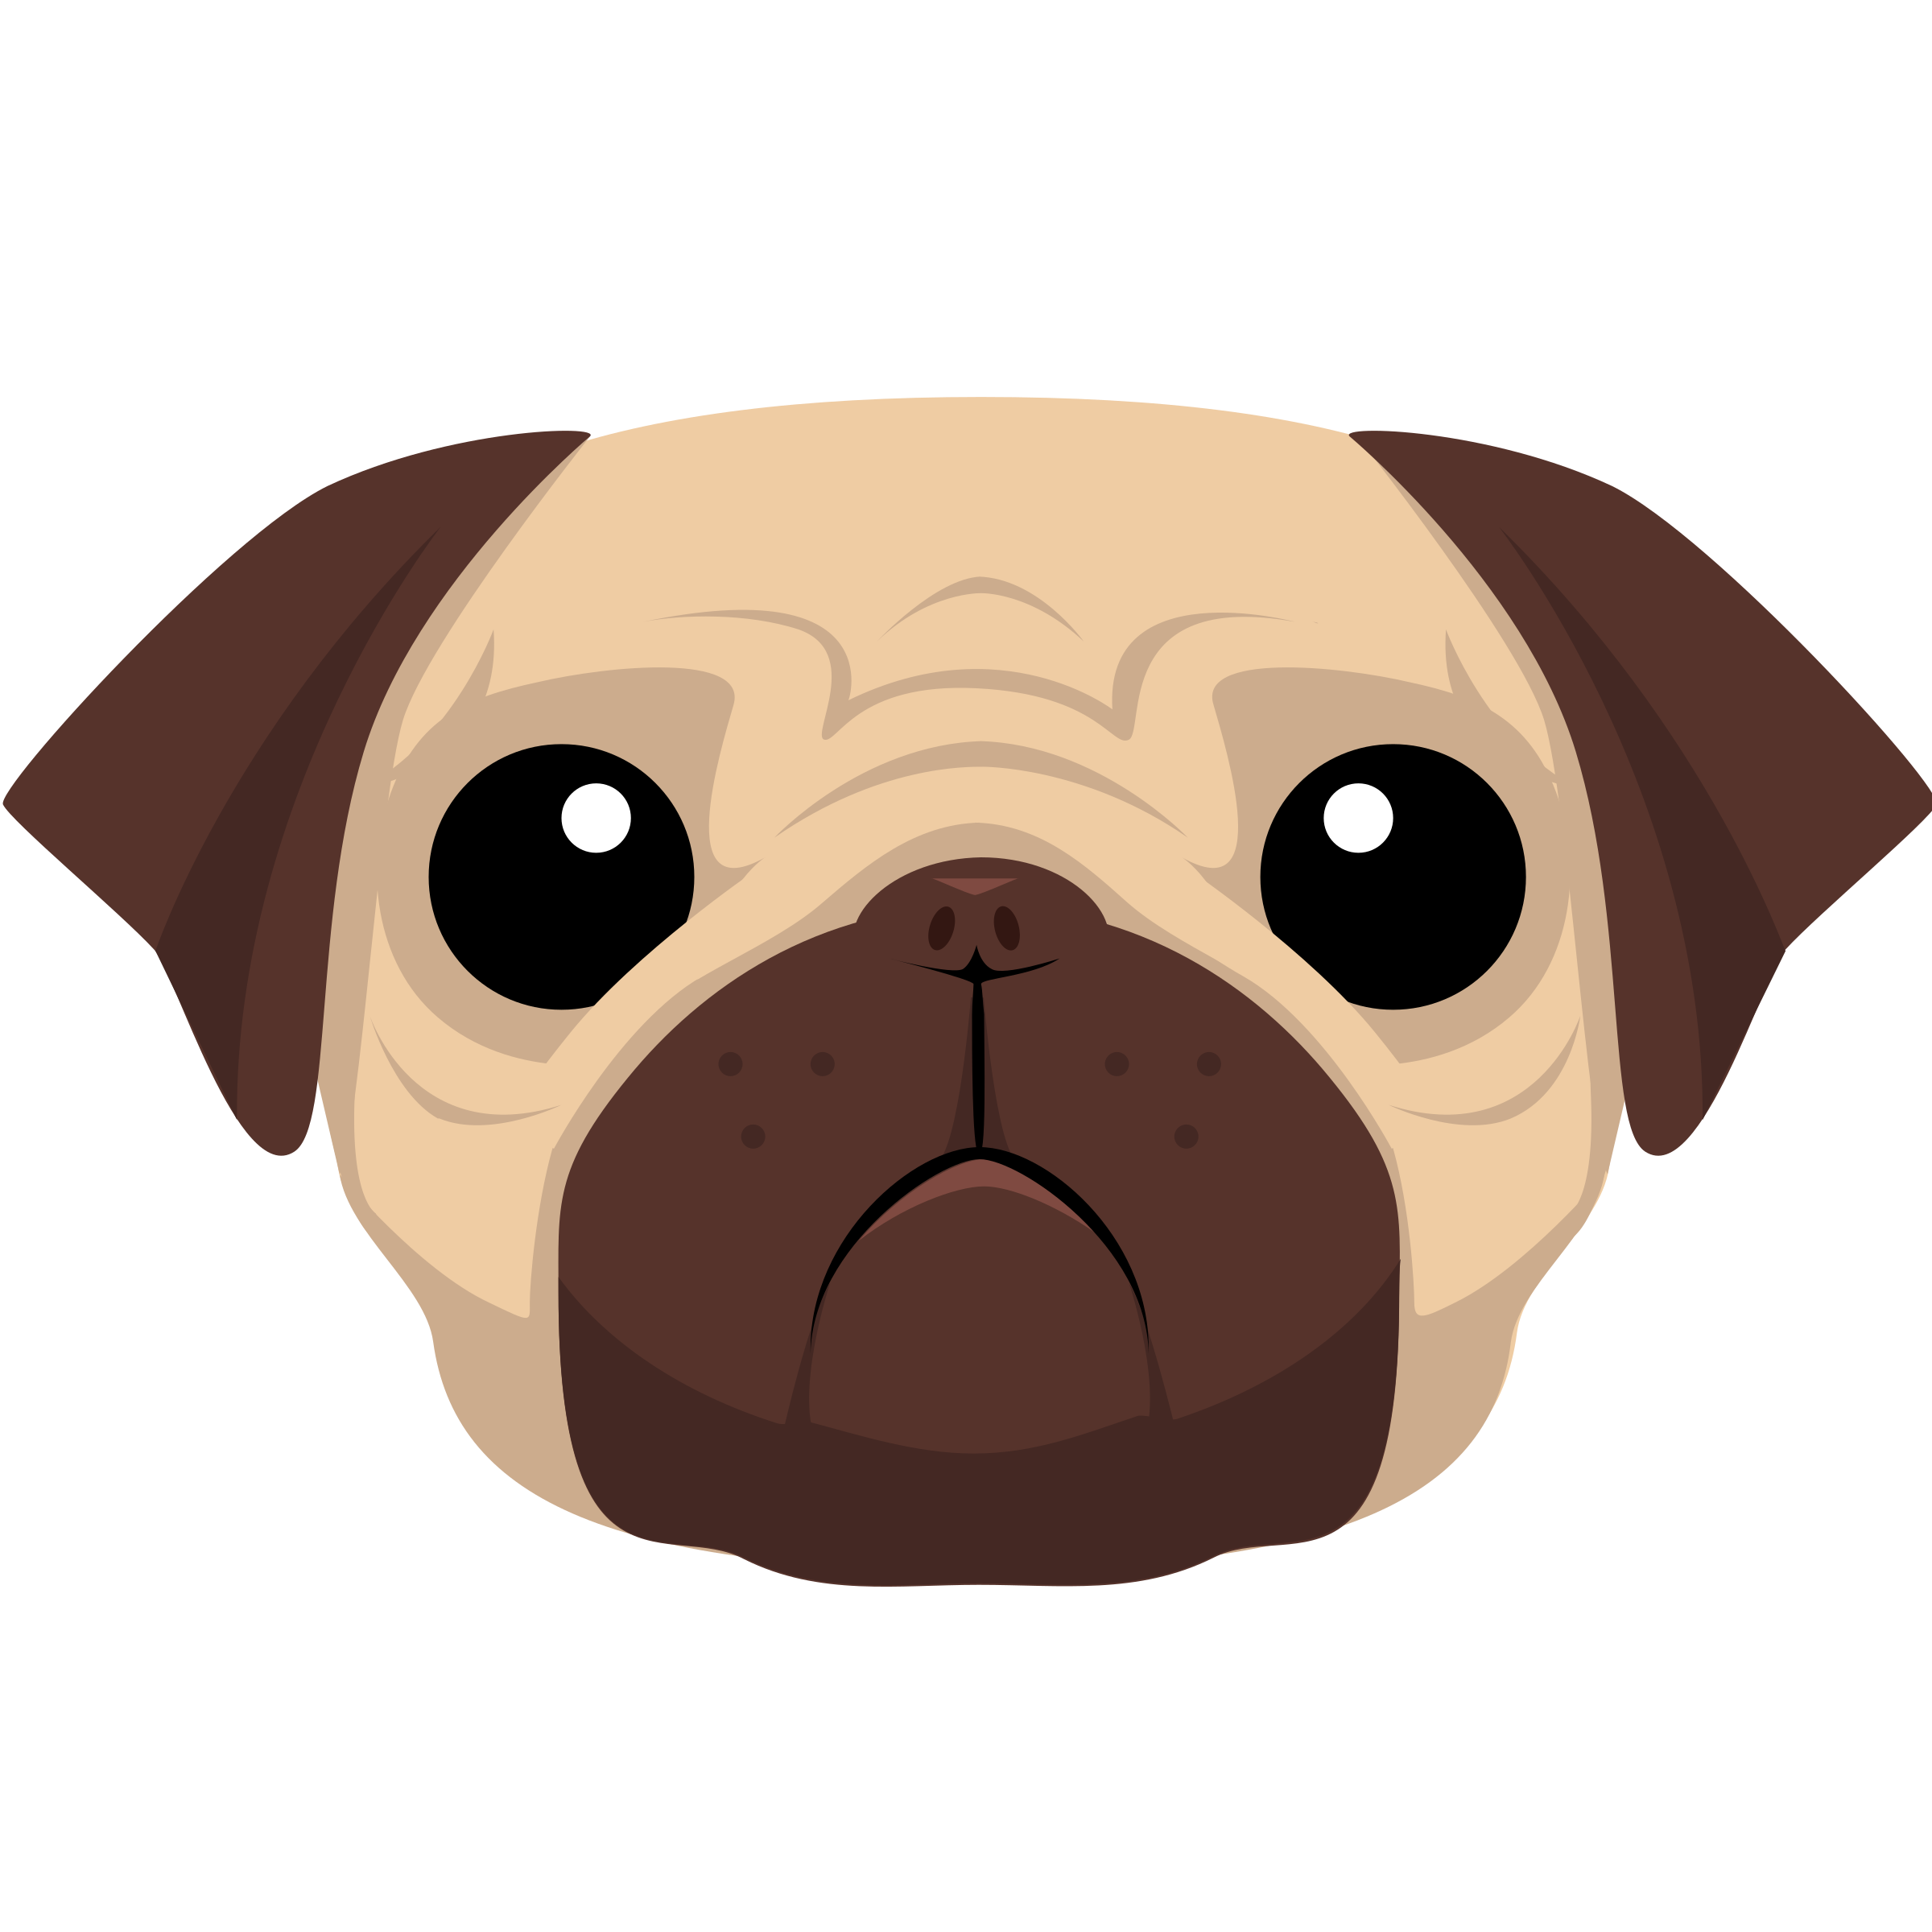 Cute Pug PNG Image File